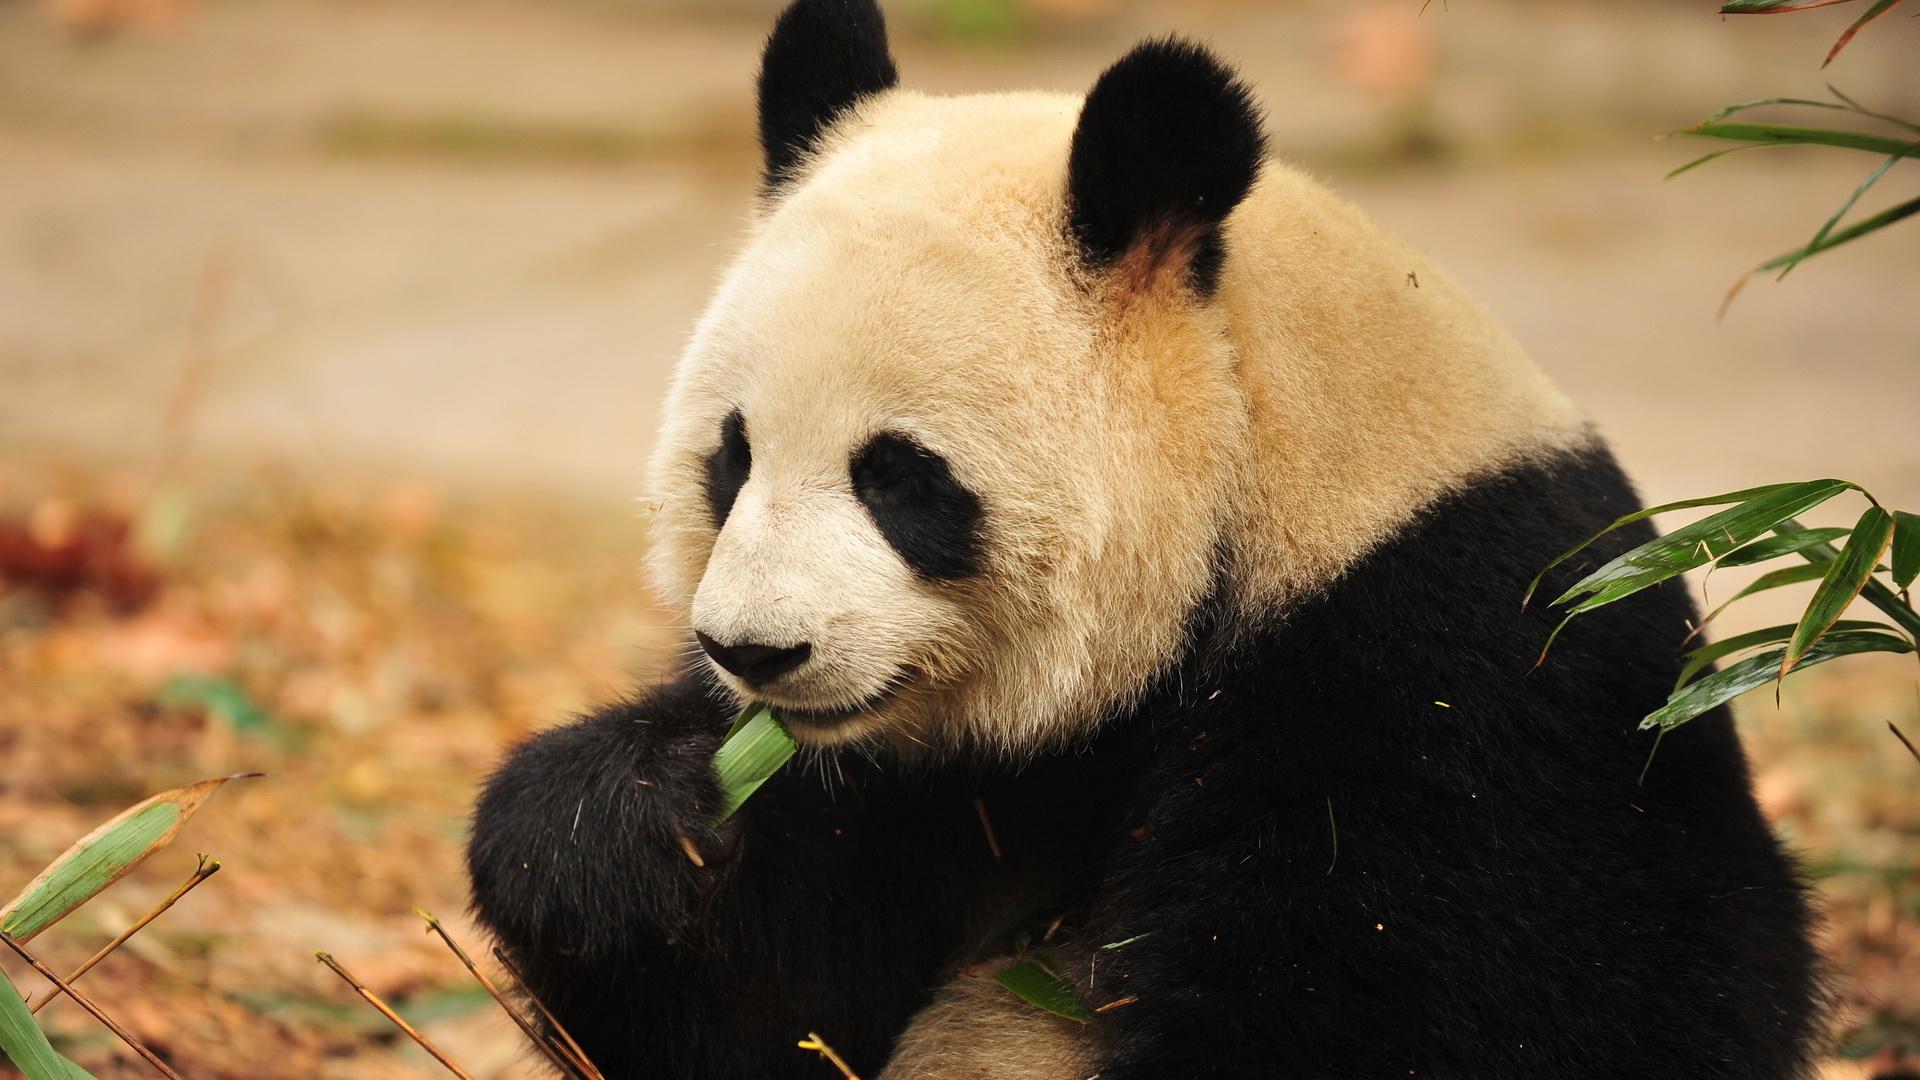 Download Wallpaper Panda eating bamboo leaf (1920x1080)